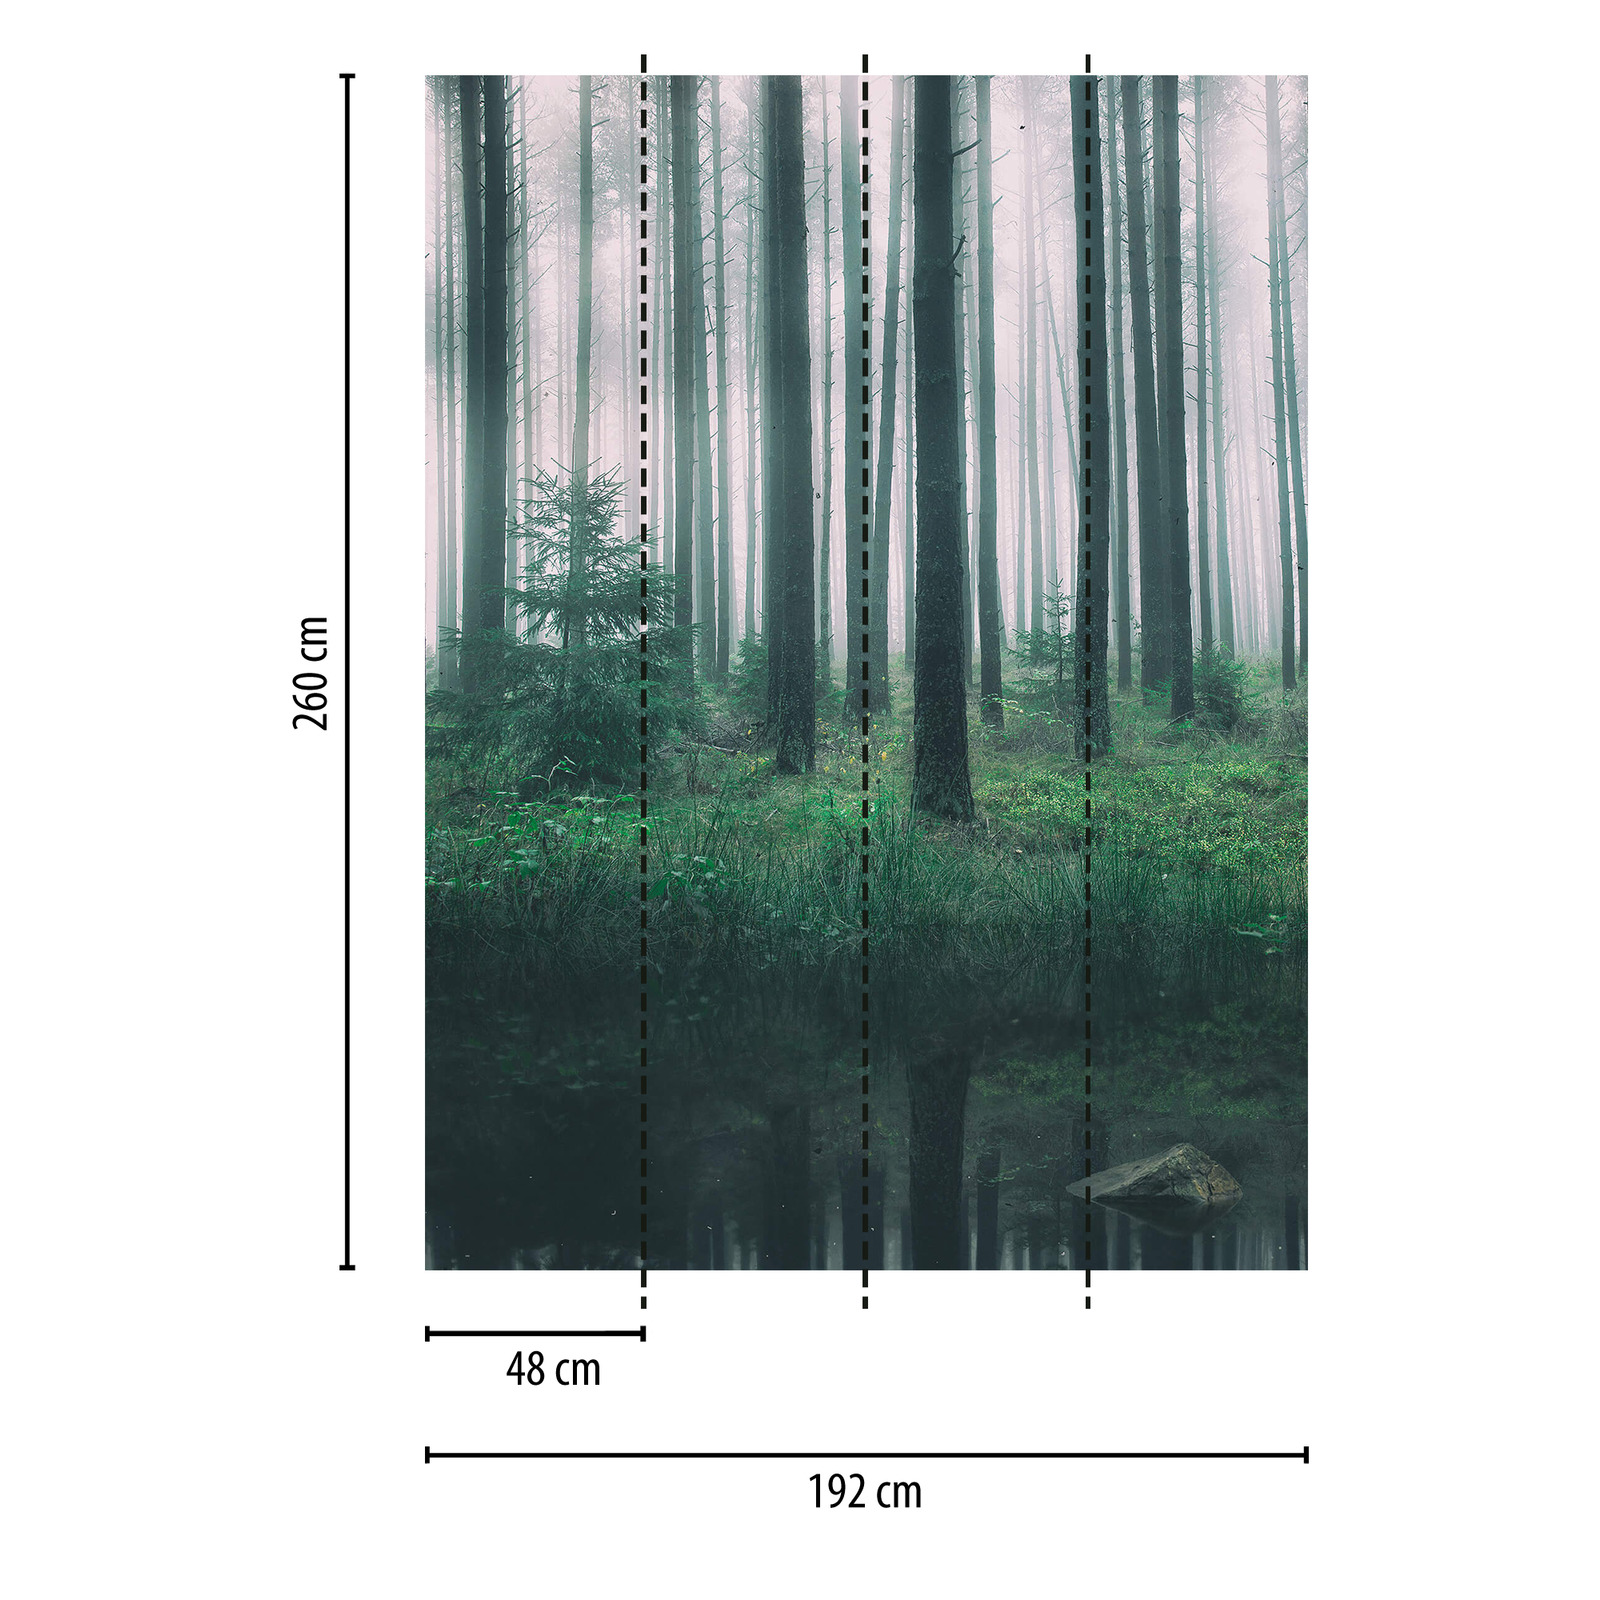             Fototapete Wald mit Bach
        